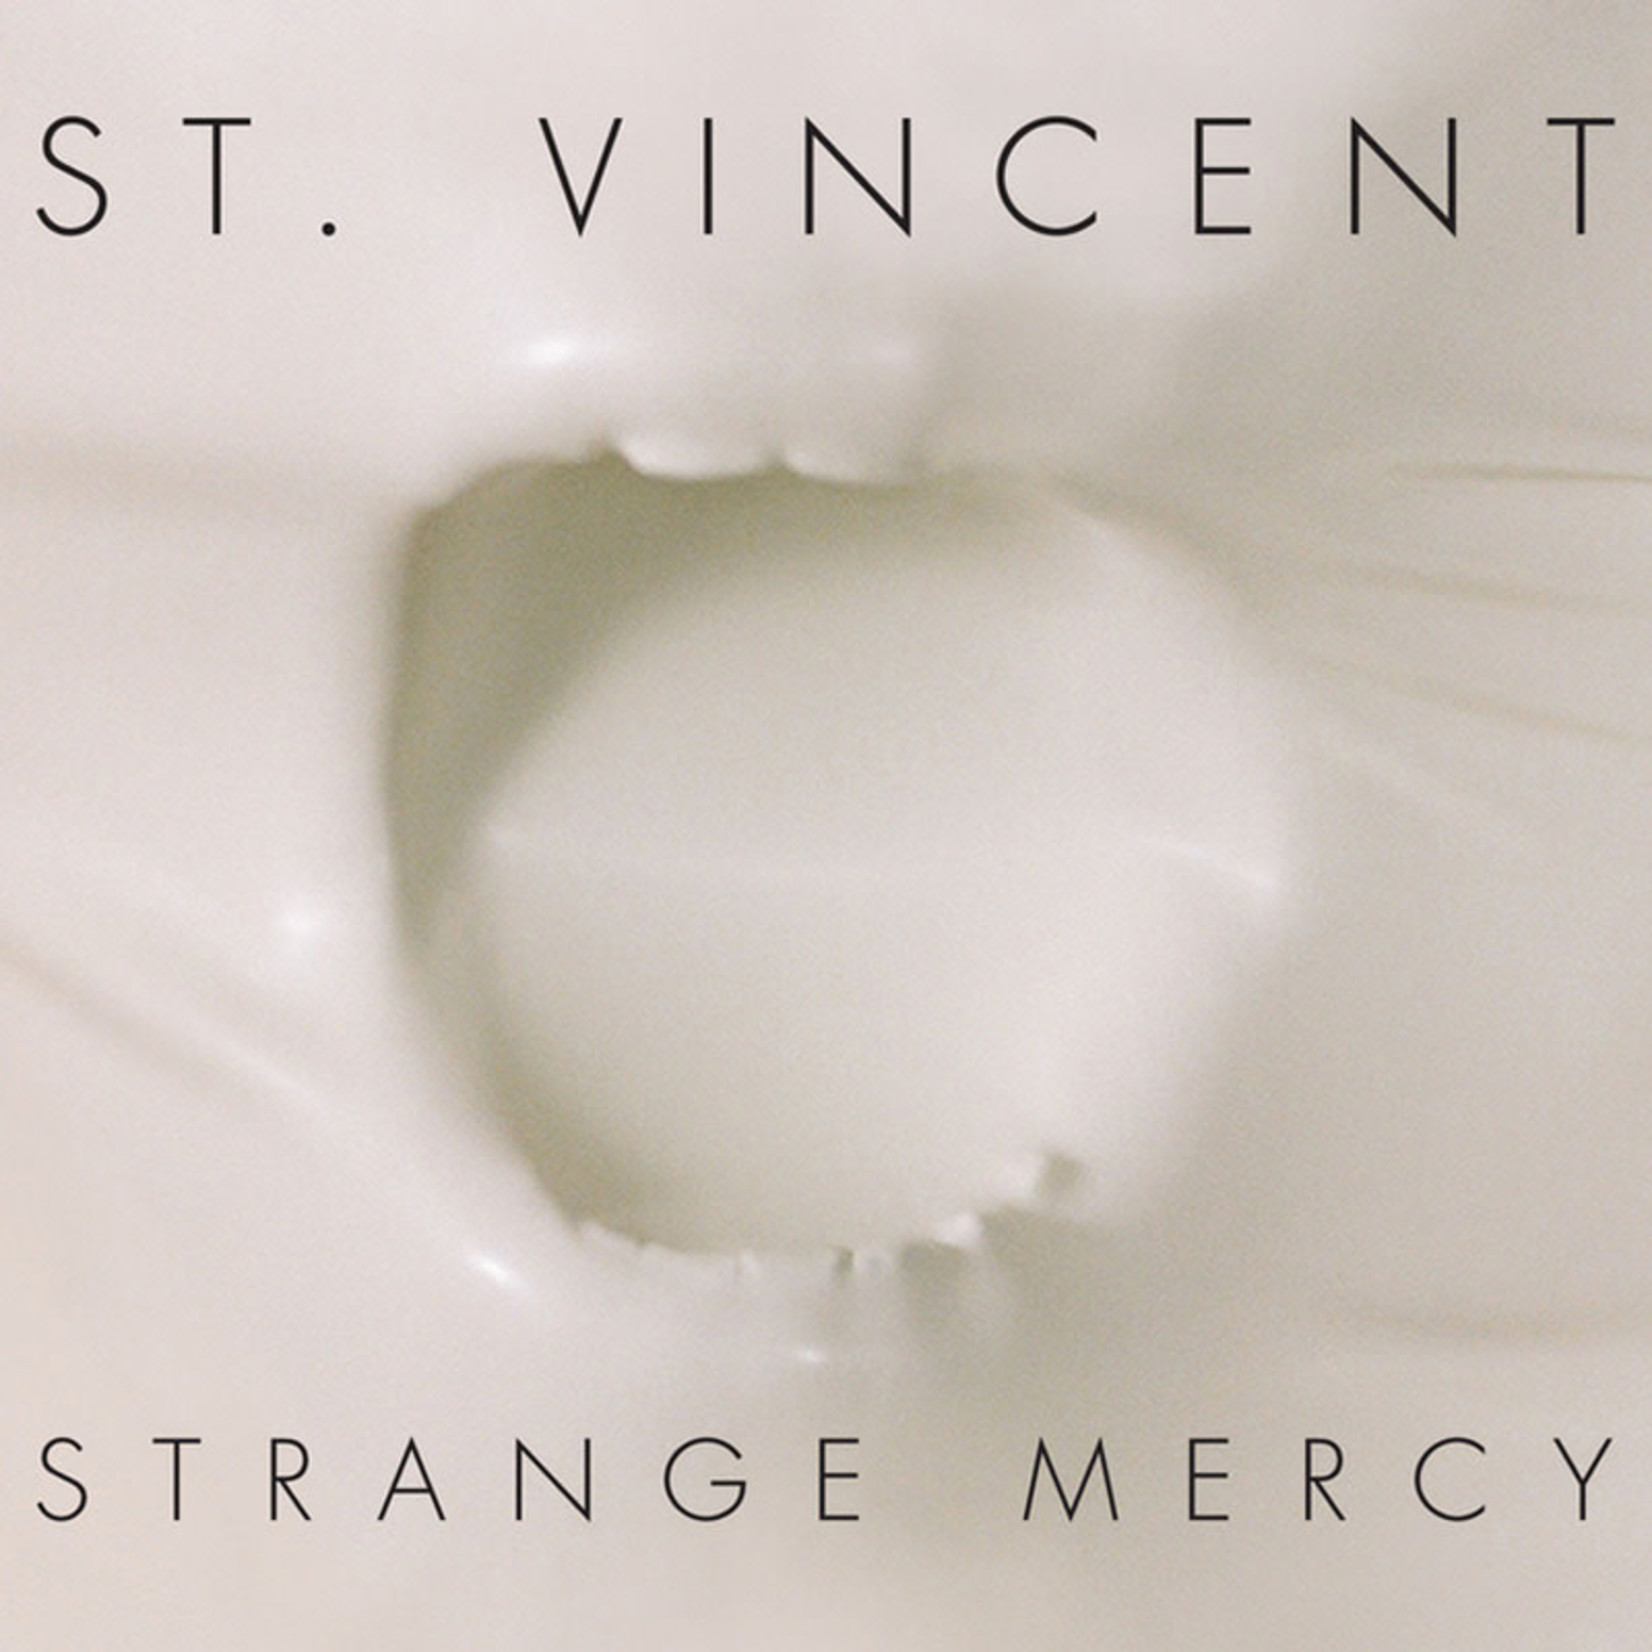 [New] St. Vincent - Strange Mercy